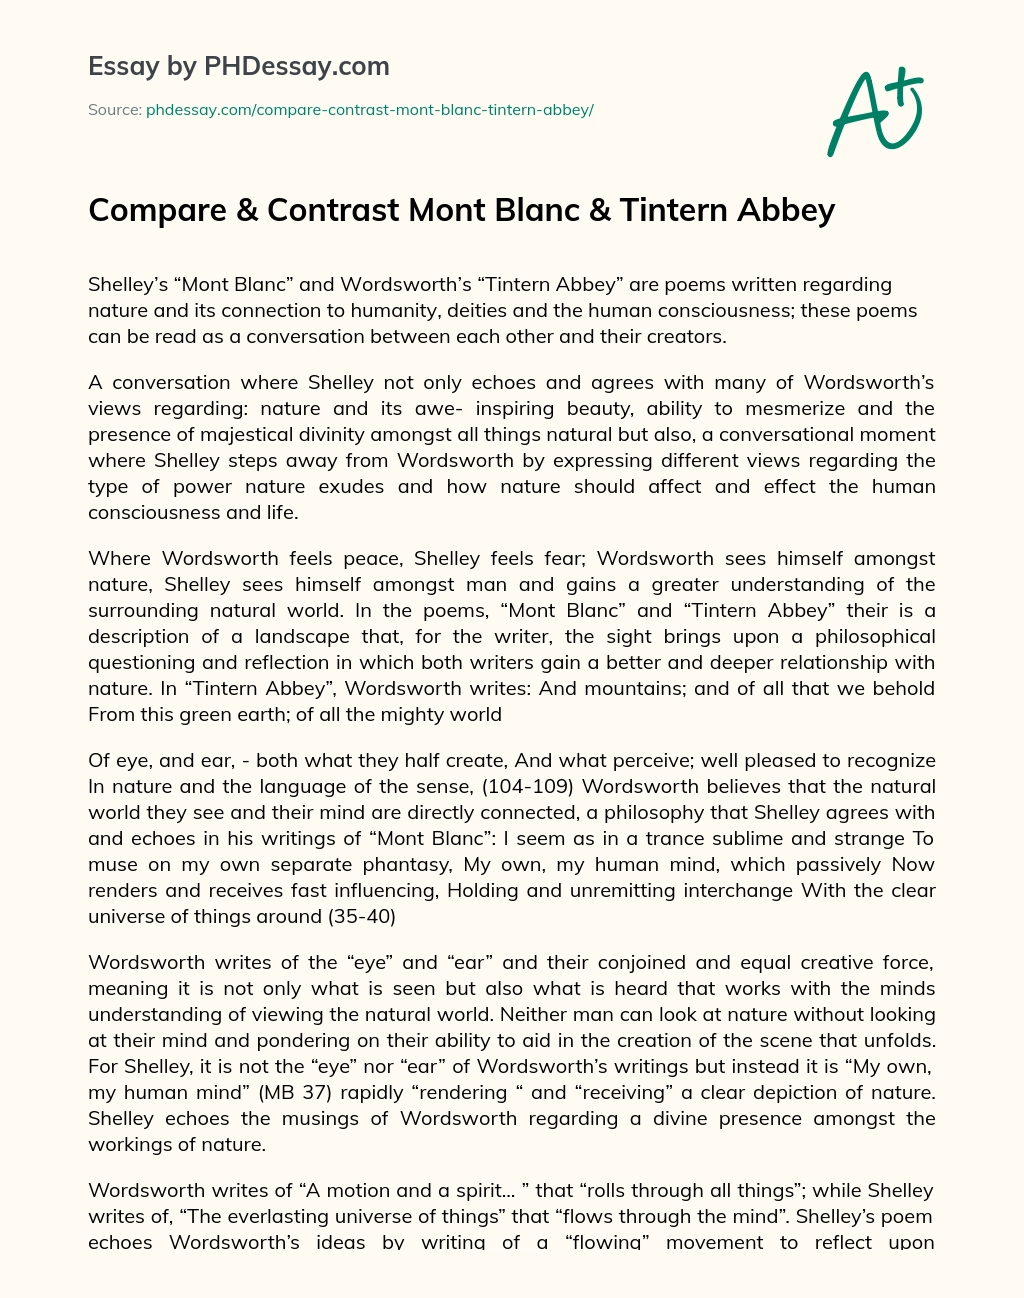 Compare & Contrast Mont Blanc & Tintern Abbey essay